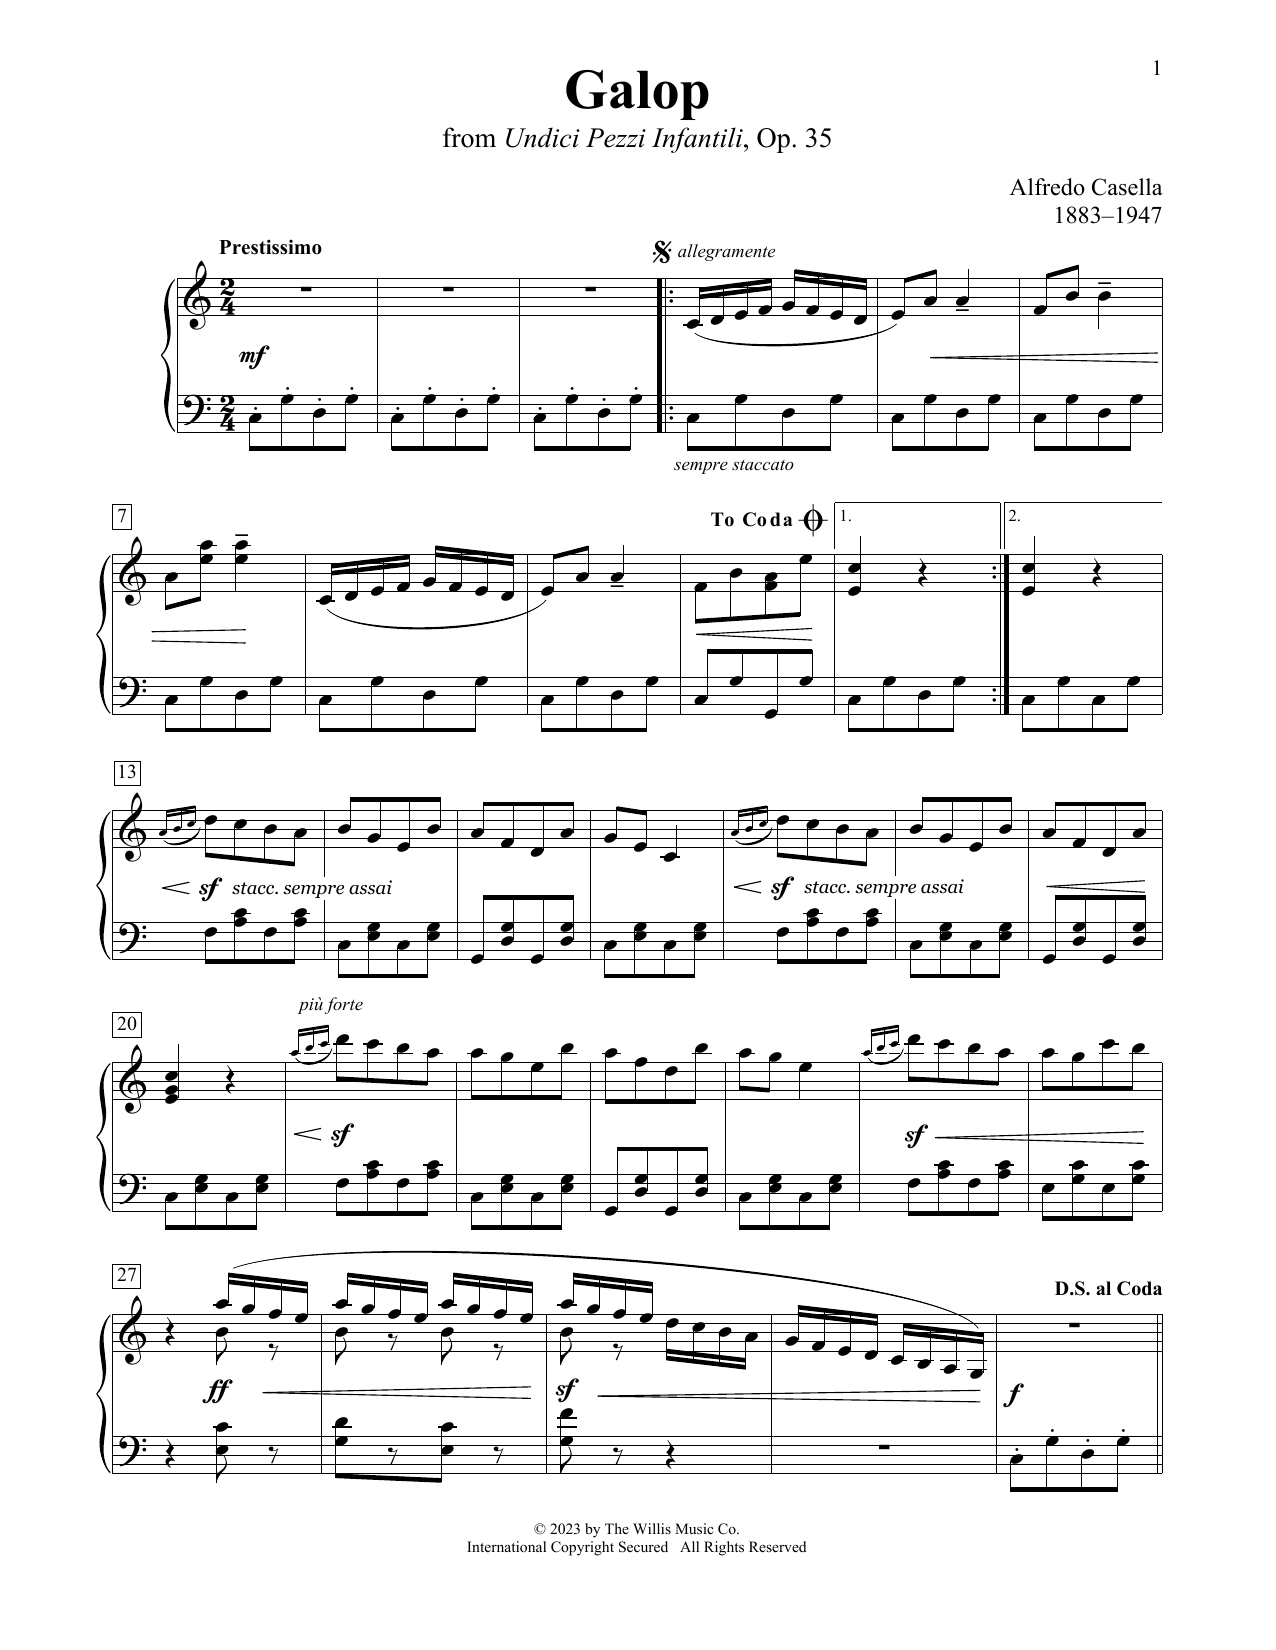 Alfredo Casella Galop sheet music notes printable PDF score